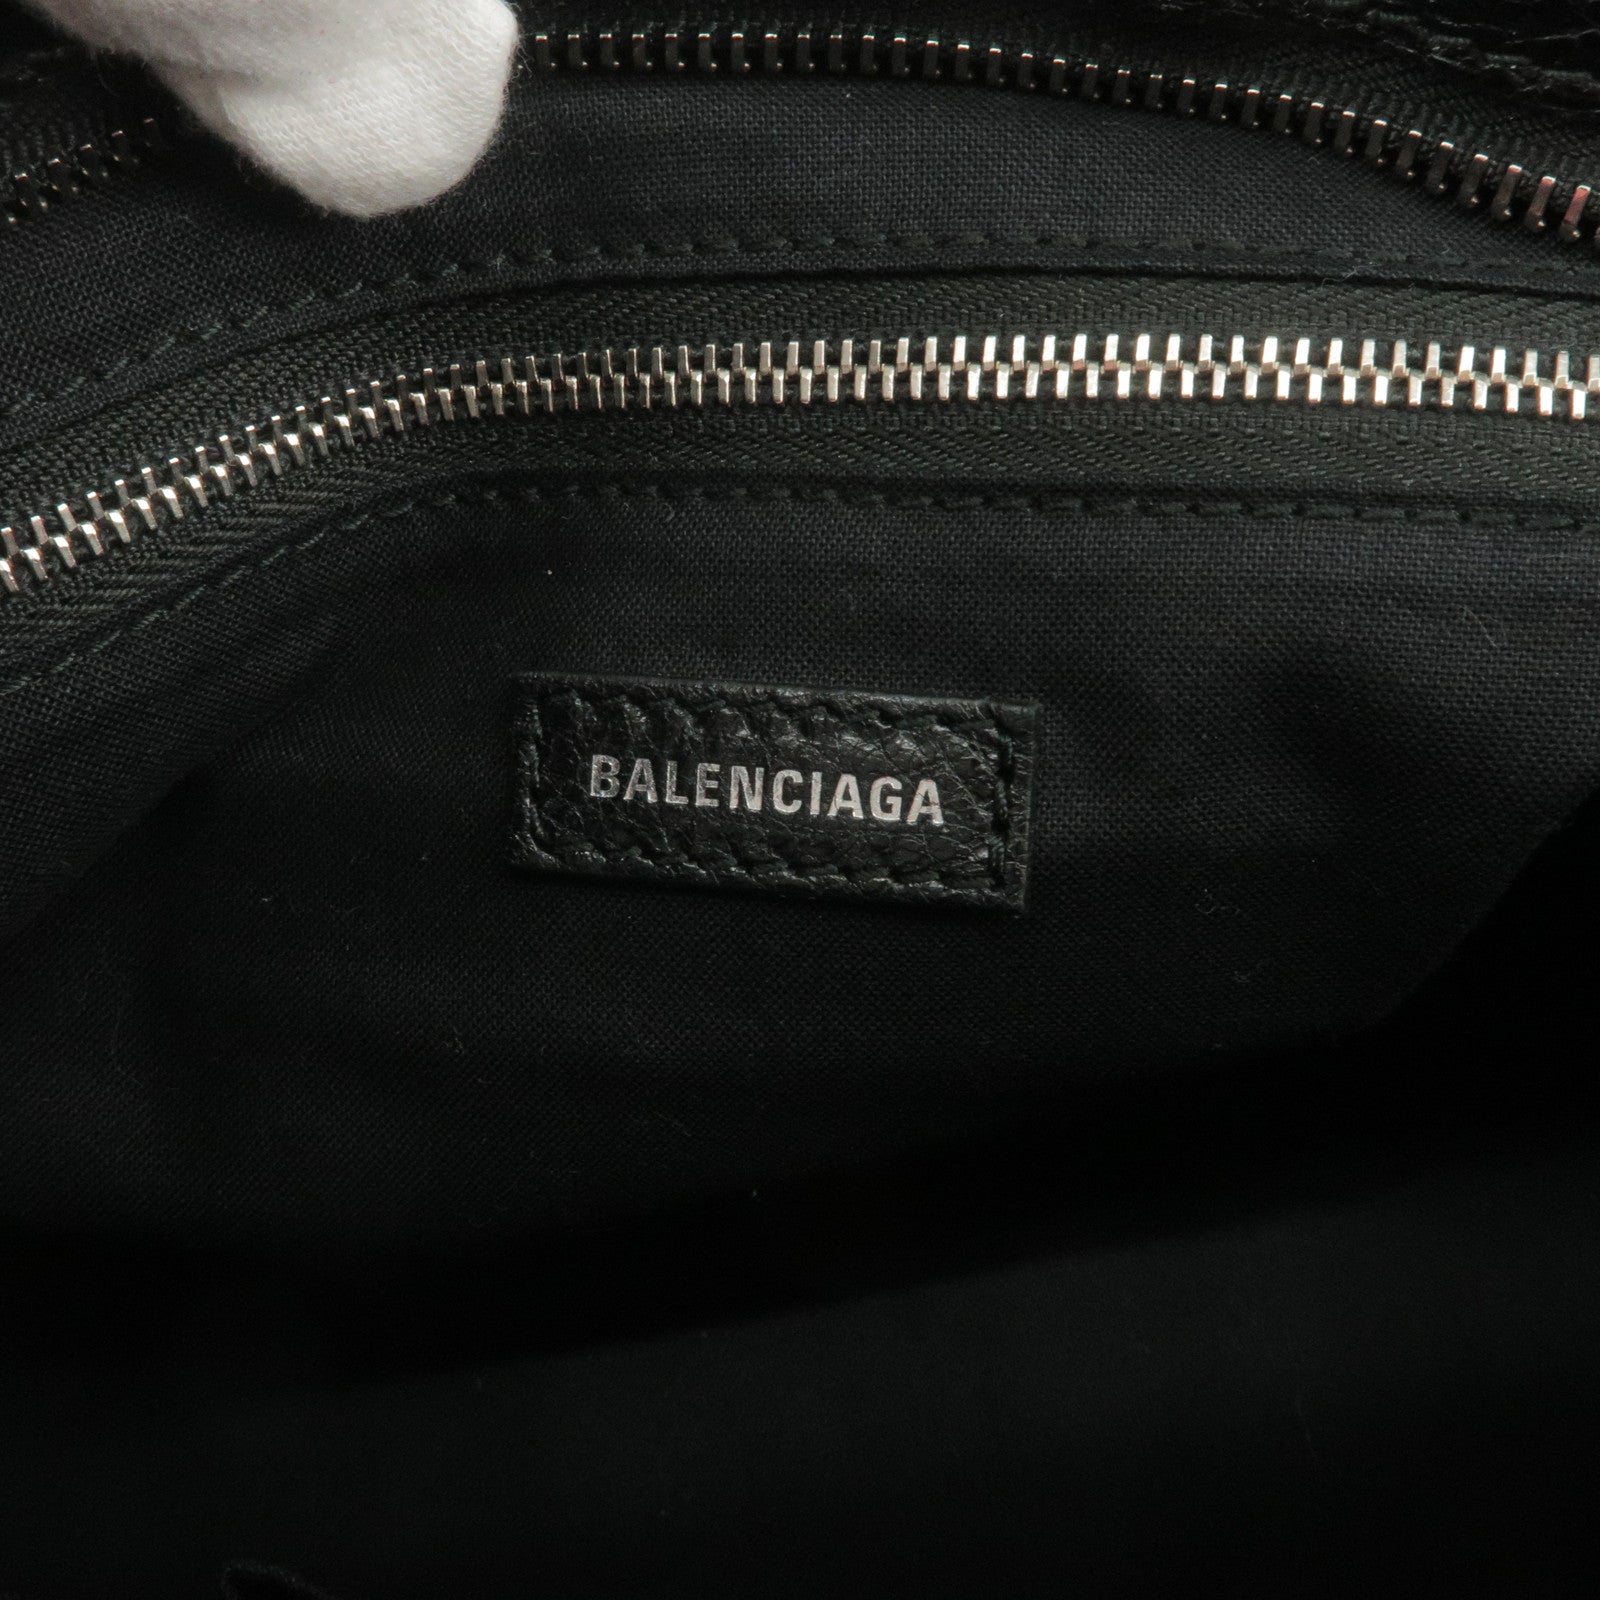 Karl Lagerfeld logo-print Tote Bag - Neutrals